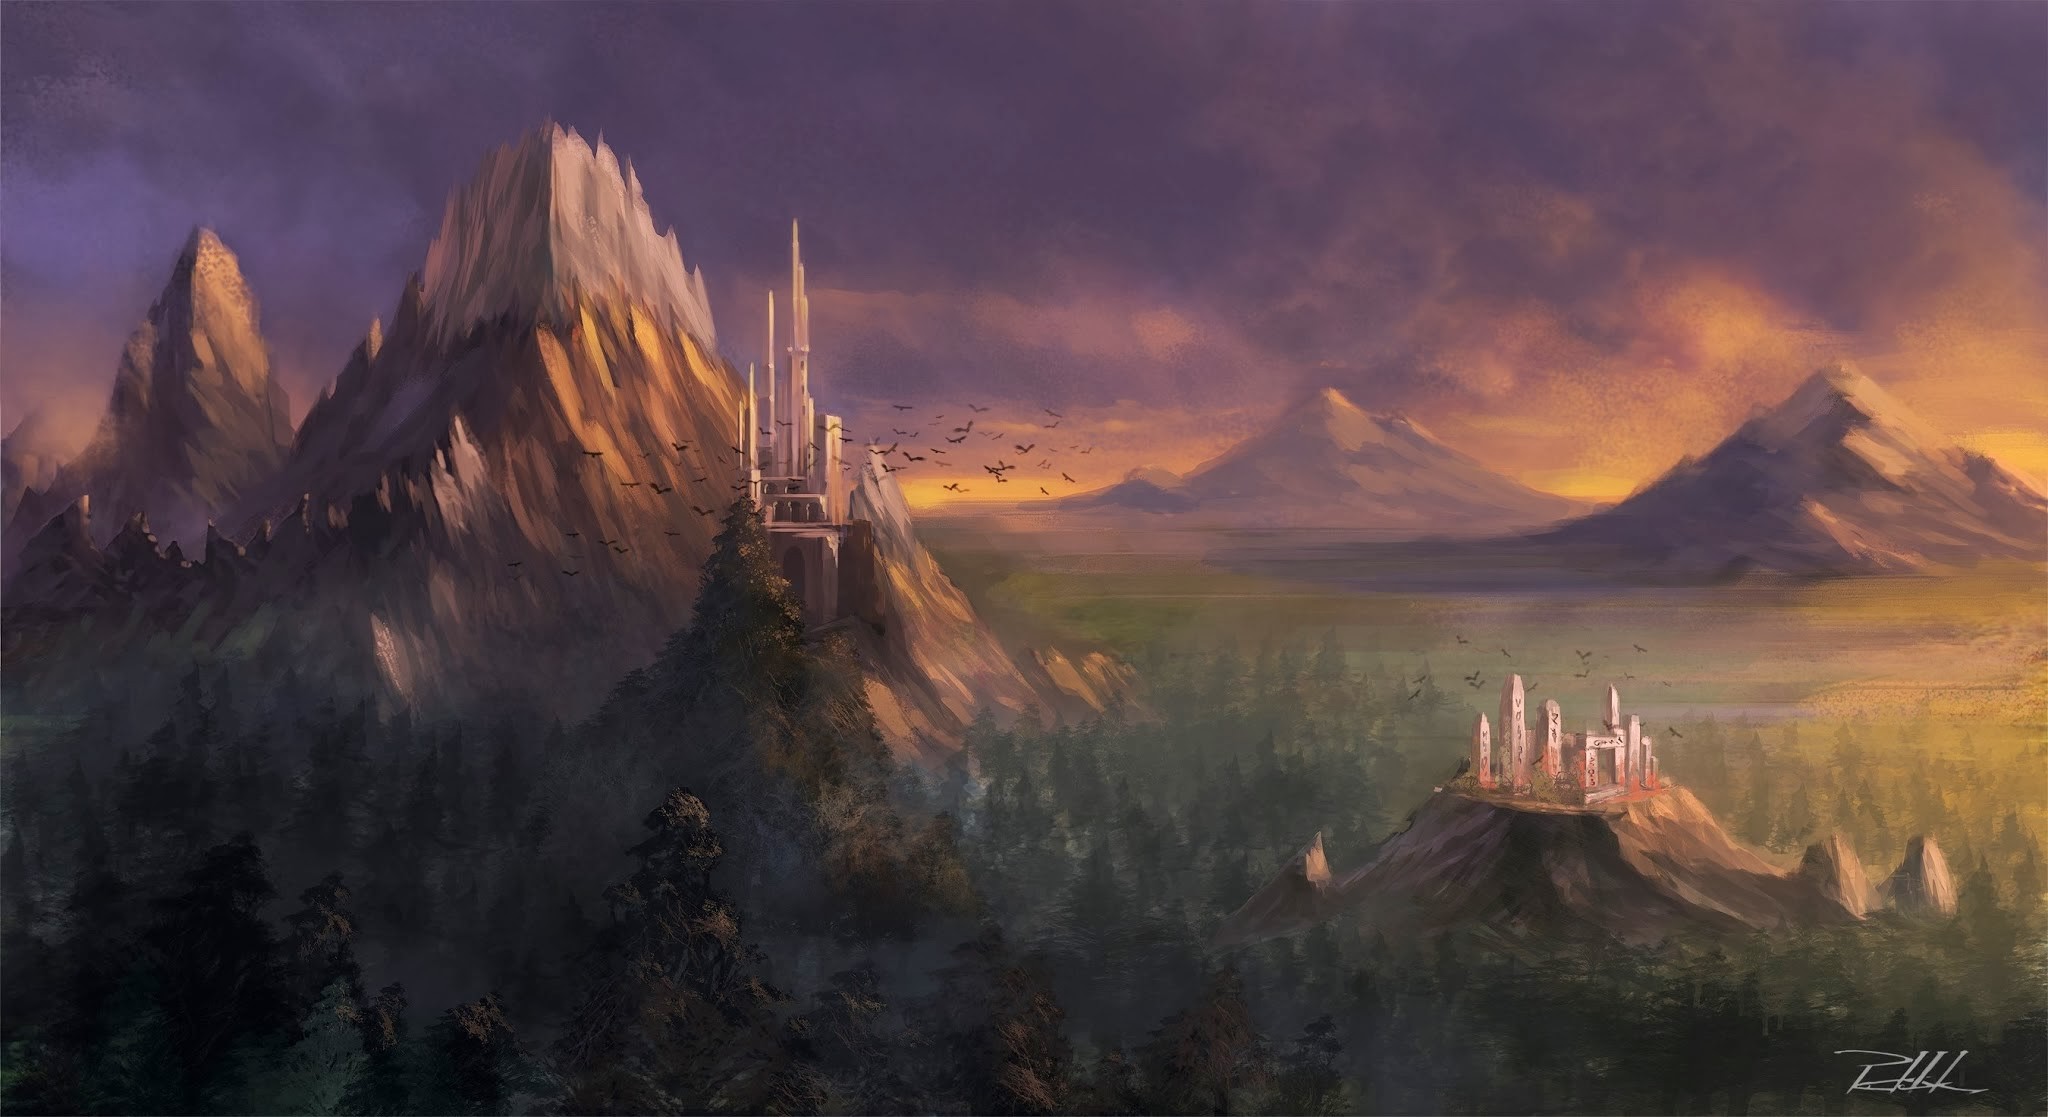 General 2048x1117 castle mountains landscape forest fantasy art fantasy city